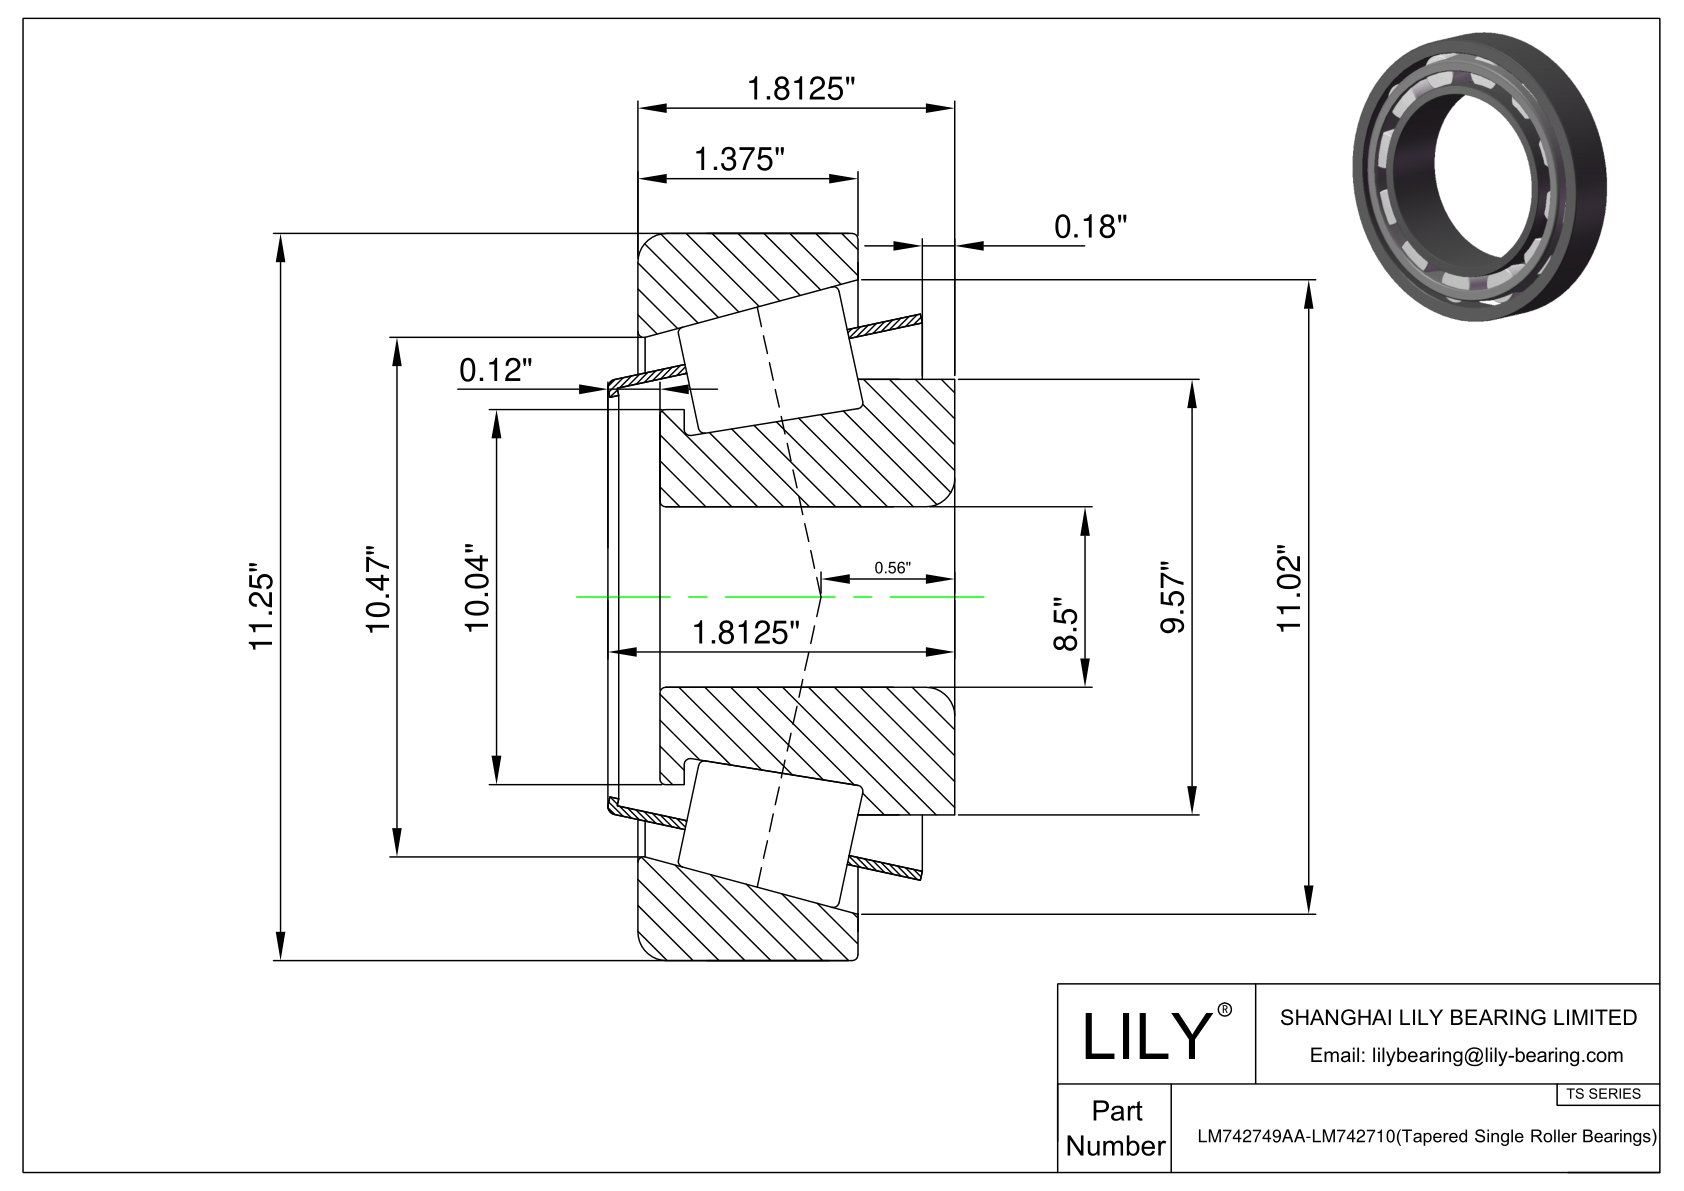 LM742749AA-LM742710 TS系列(圆锥单滚子轴承)(英制) CAD图形